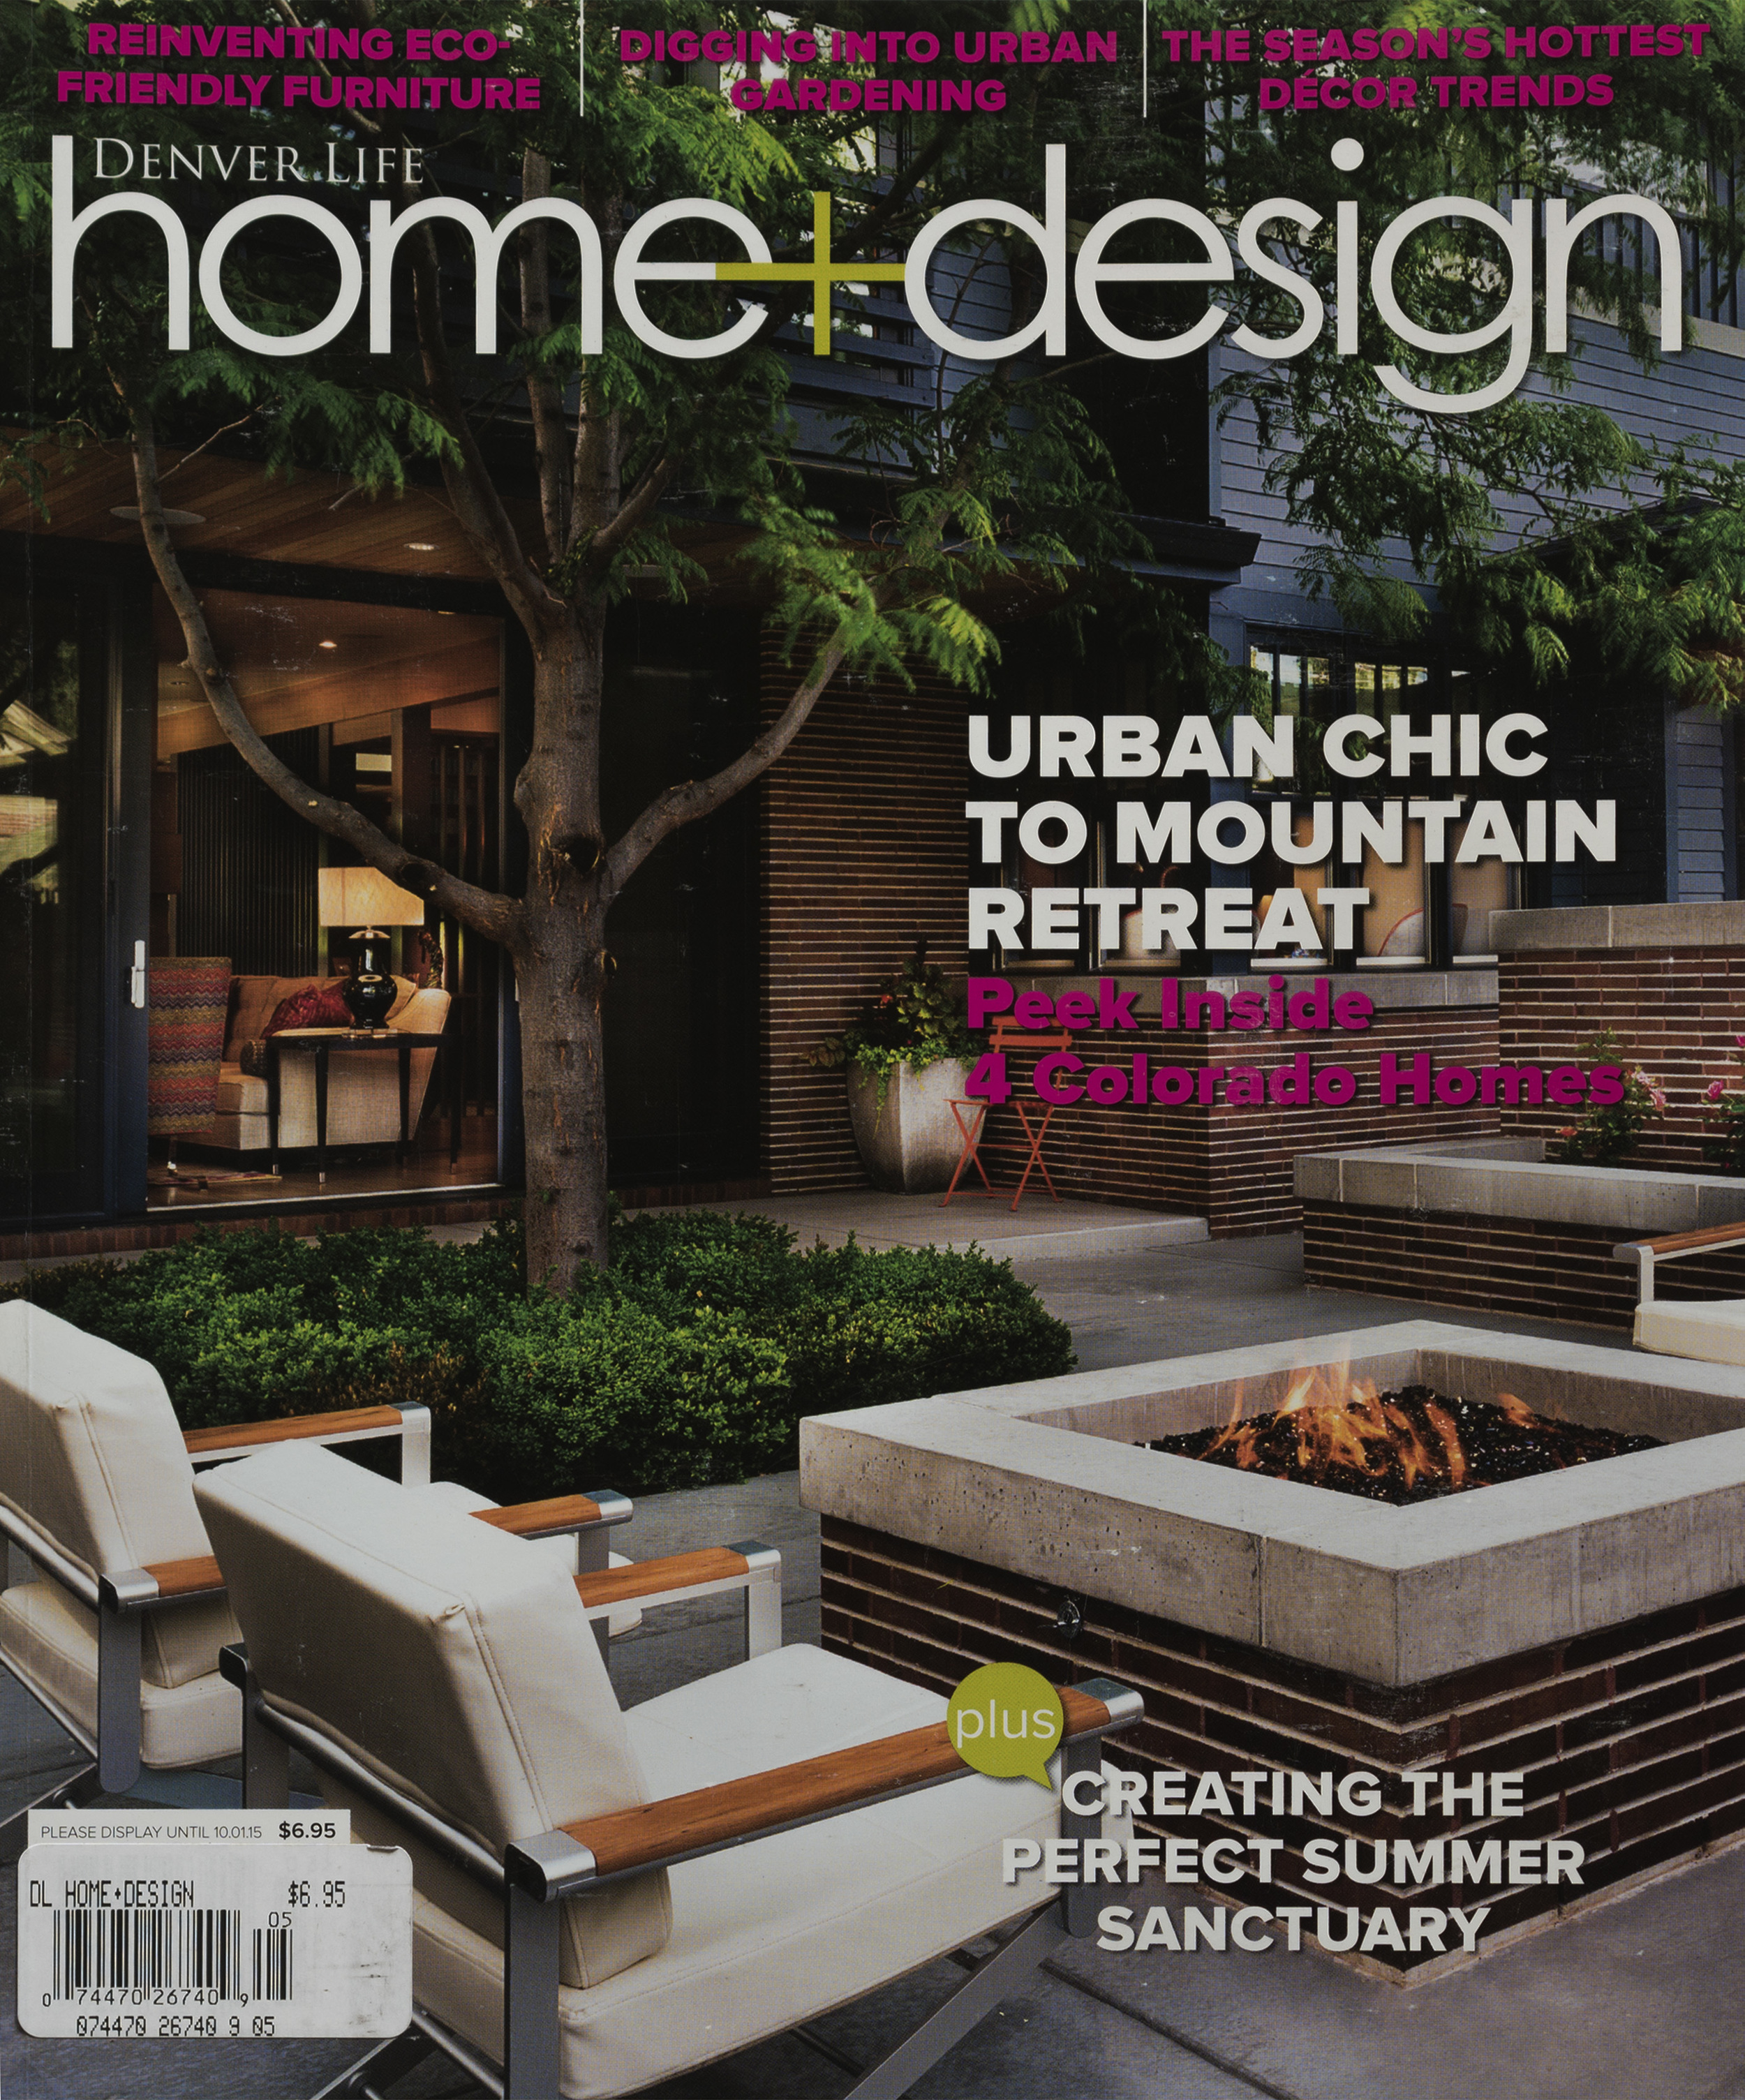 Home+Design Cover.jpg